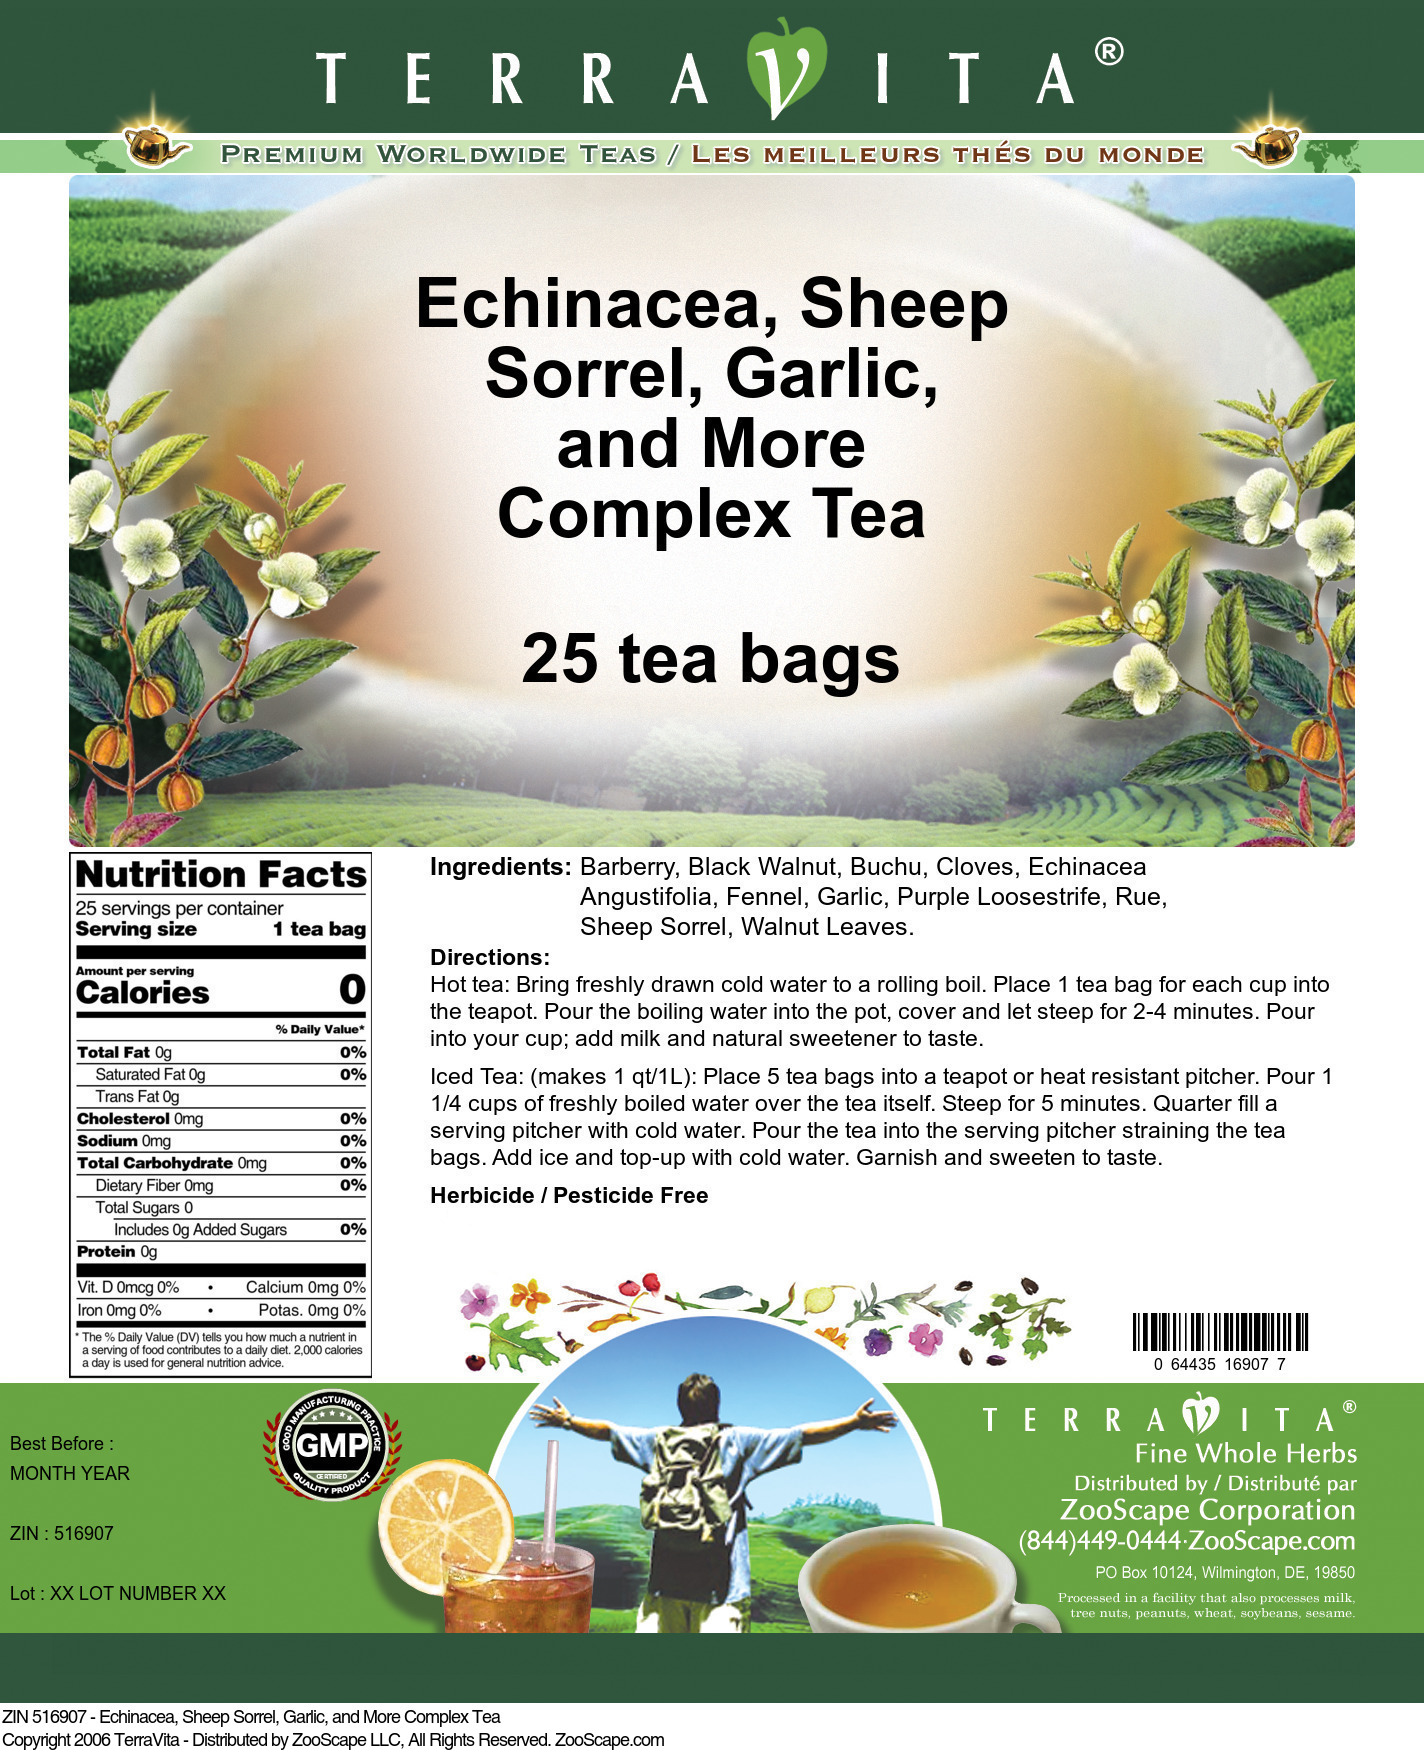 Echinacea, Sheep Sorrel, Garlic, and More Complex Tea - Label